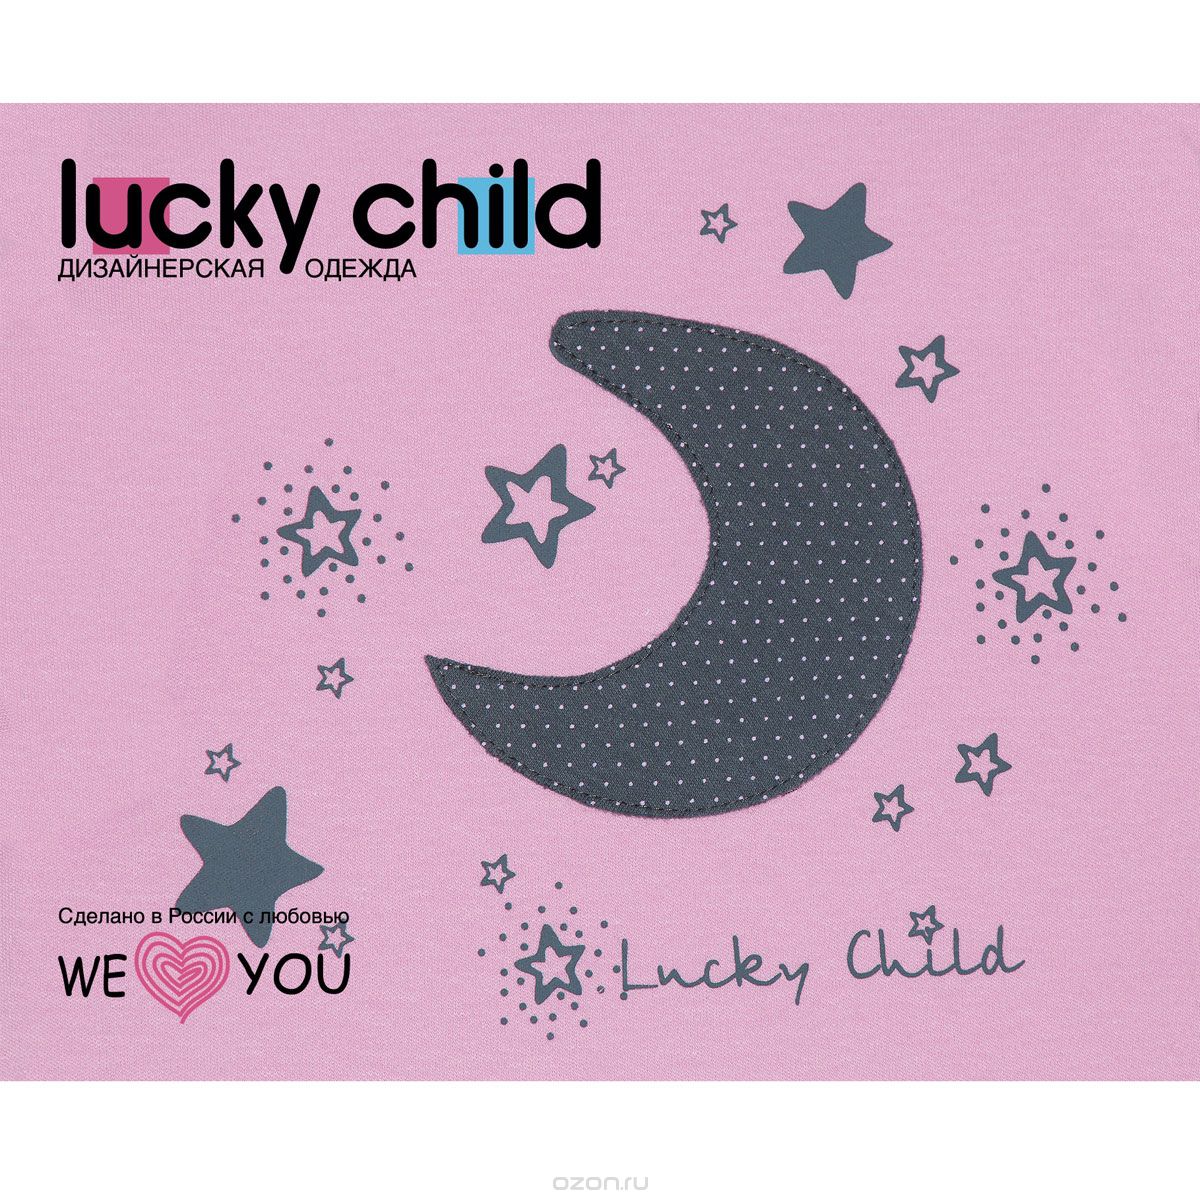    Lucky Child: , , : -, . 12-411.  98/104